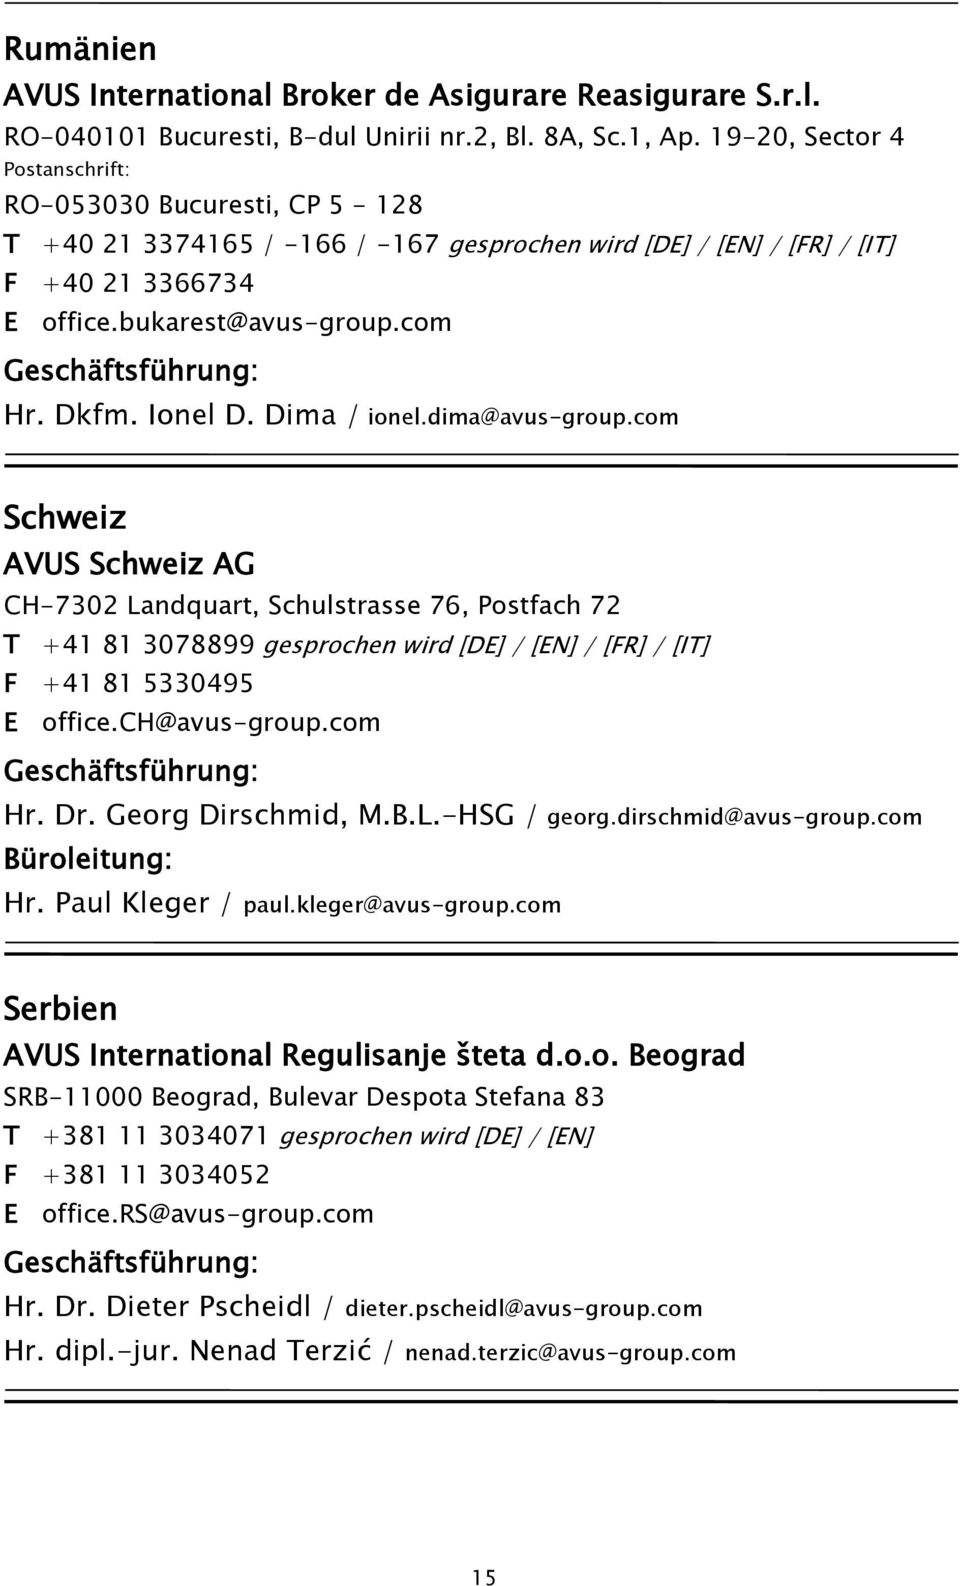 Ionel D. Dima / ionel.dima@avus-group.com Schweiz AVUS Schweiz AG CH-7302 Landquart, Schulstrasse 76, Postfach 72 T +41 81 3078899 gesprochen wird [DE] / [EN] / [FR] / [IT] F +41 81 5330495 E office.